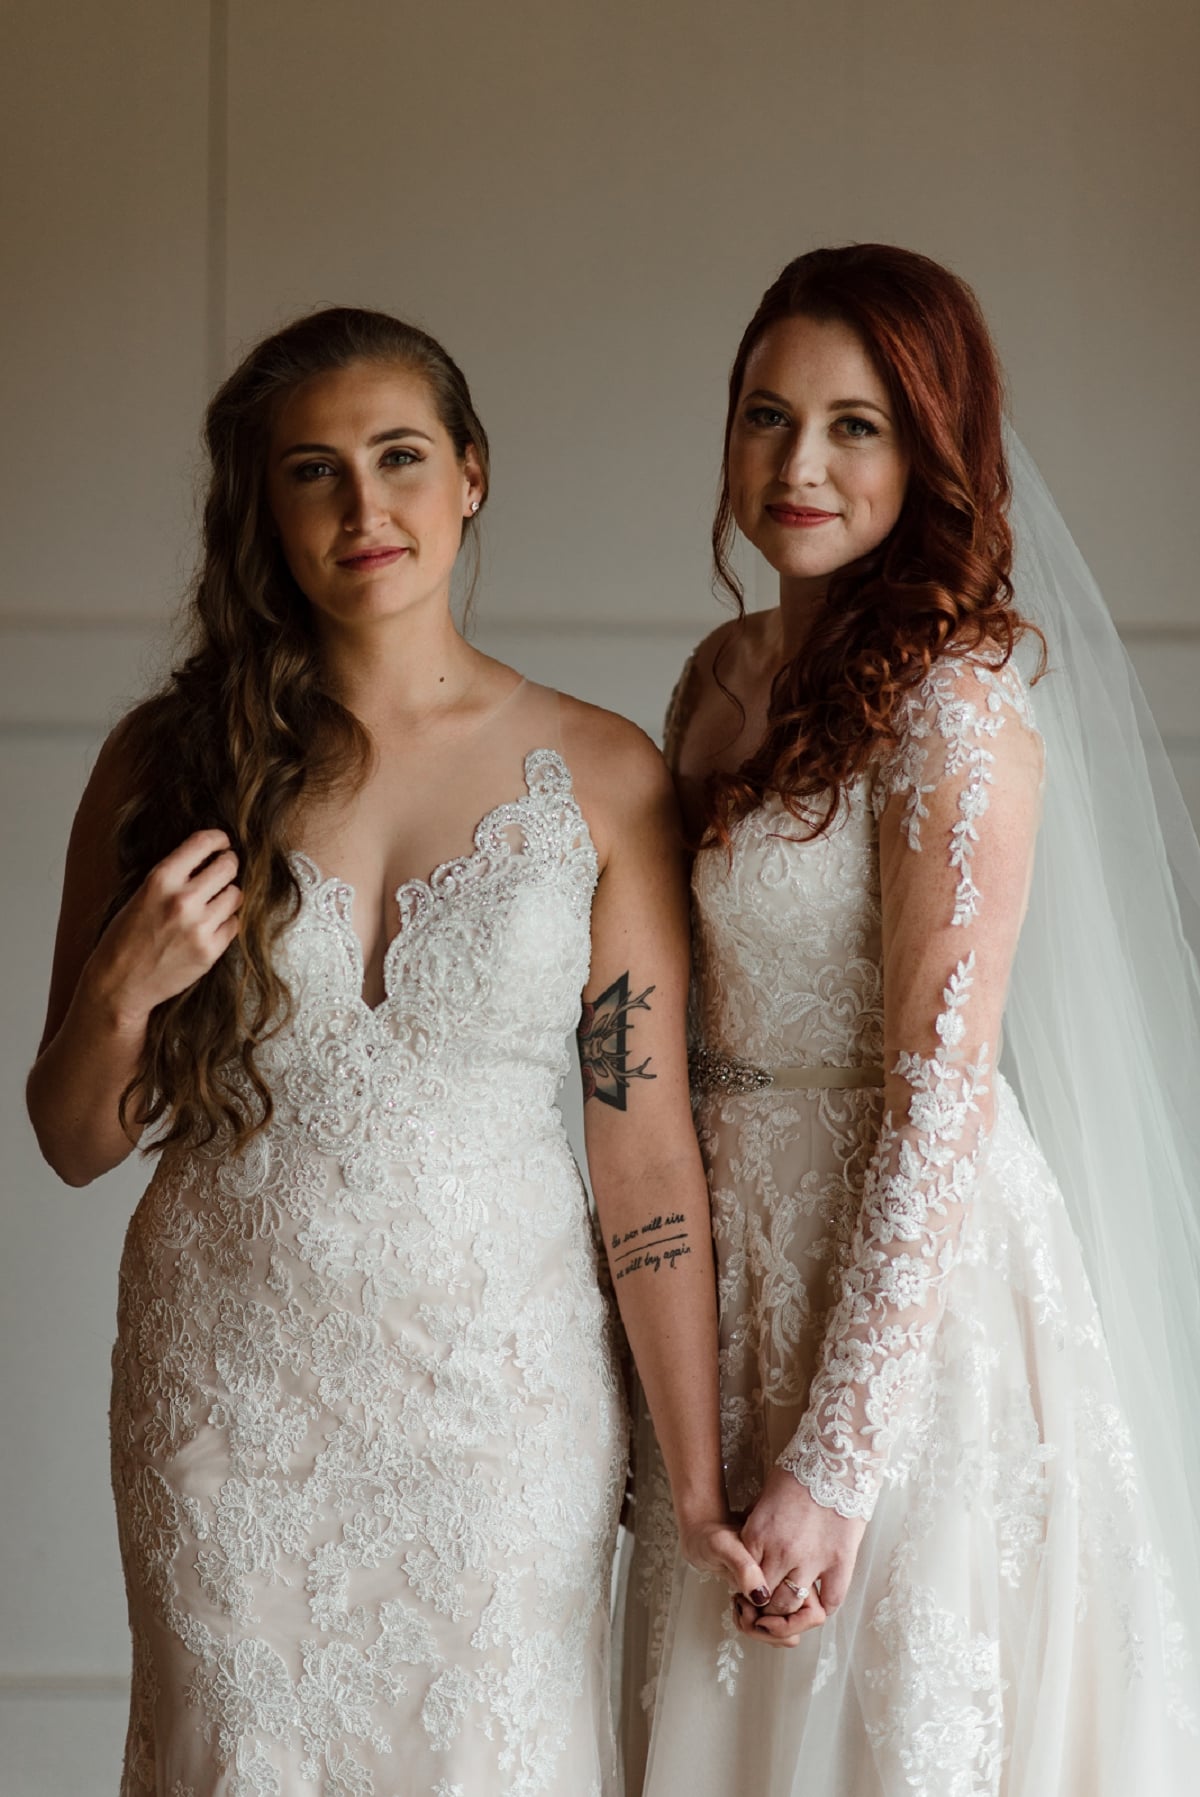 flawless brides on wedding day